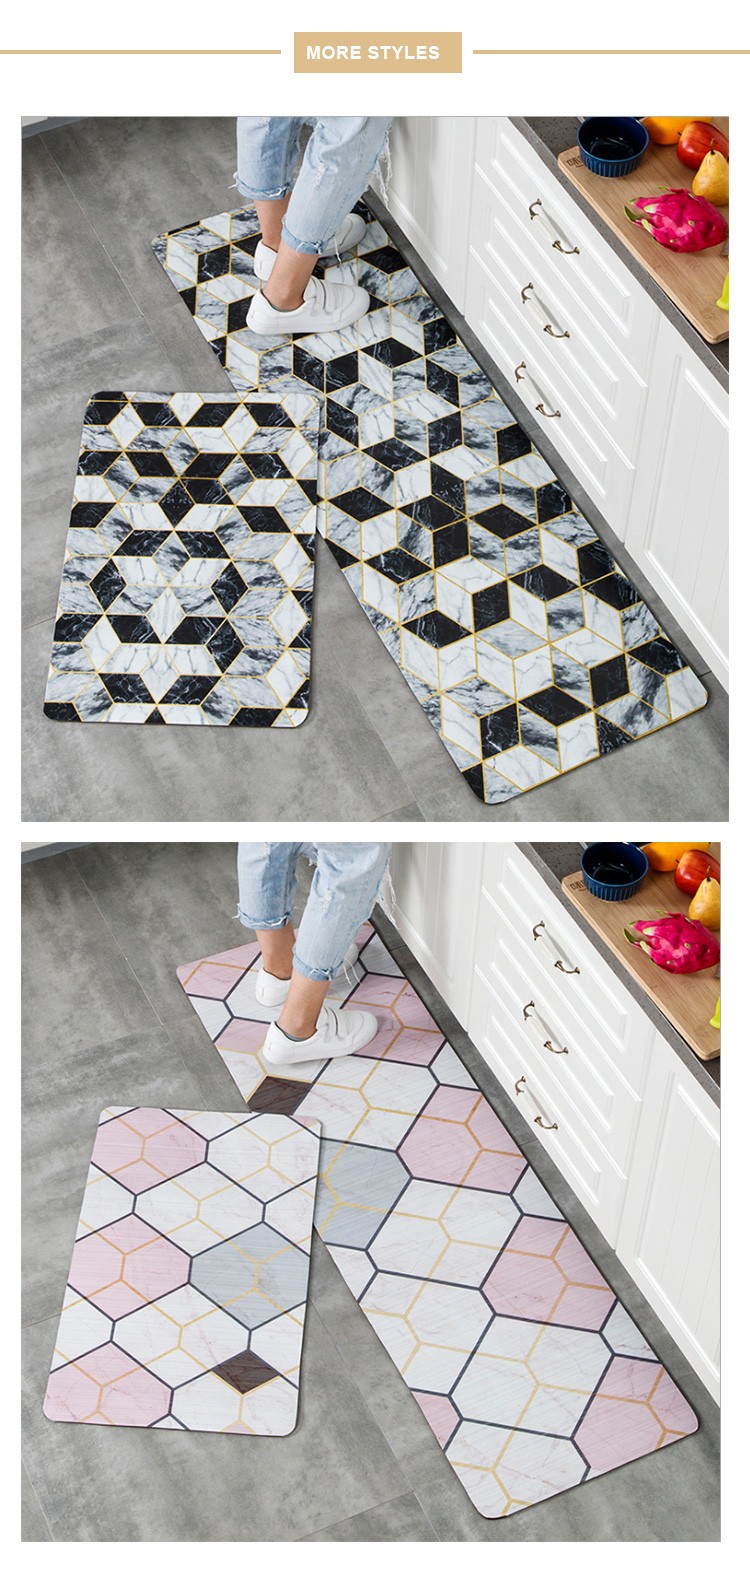 PVC Kitchen Printed Floor Mats